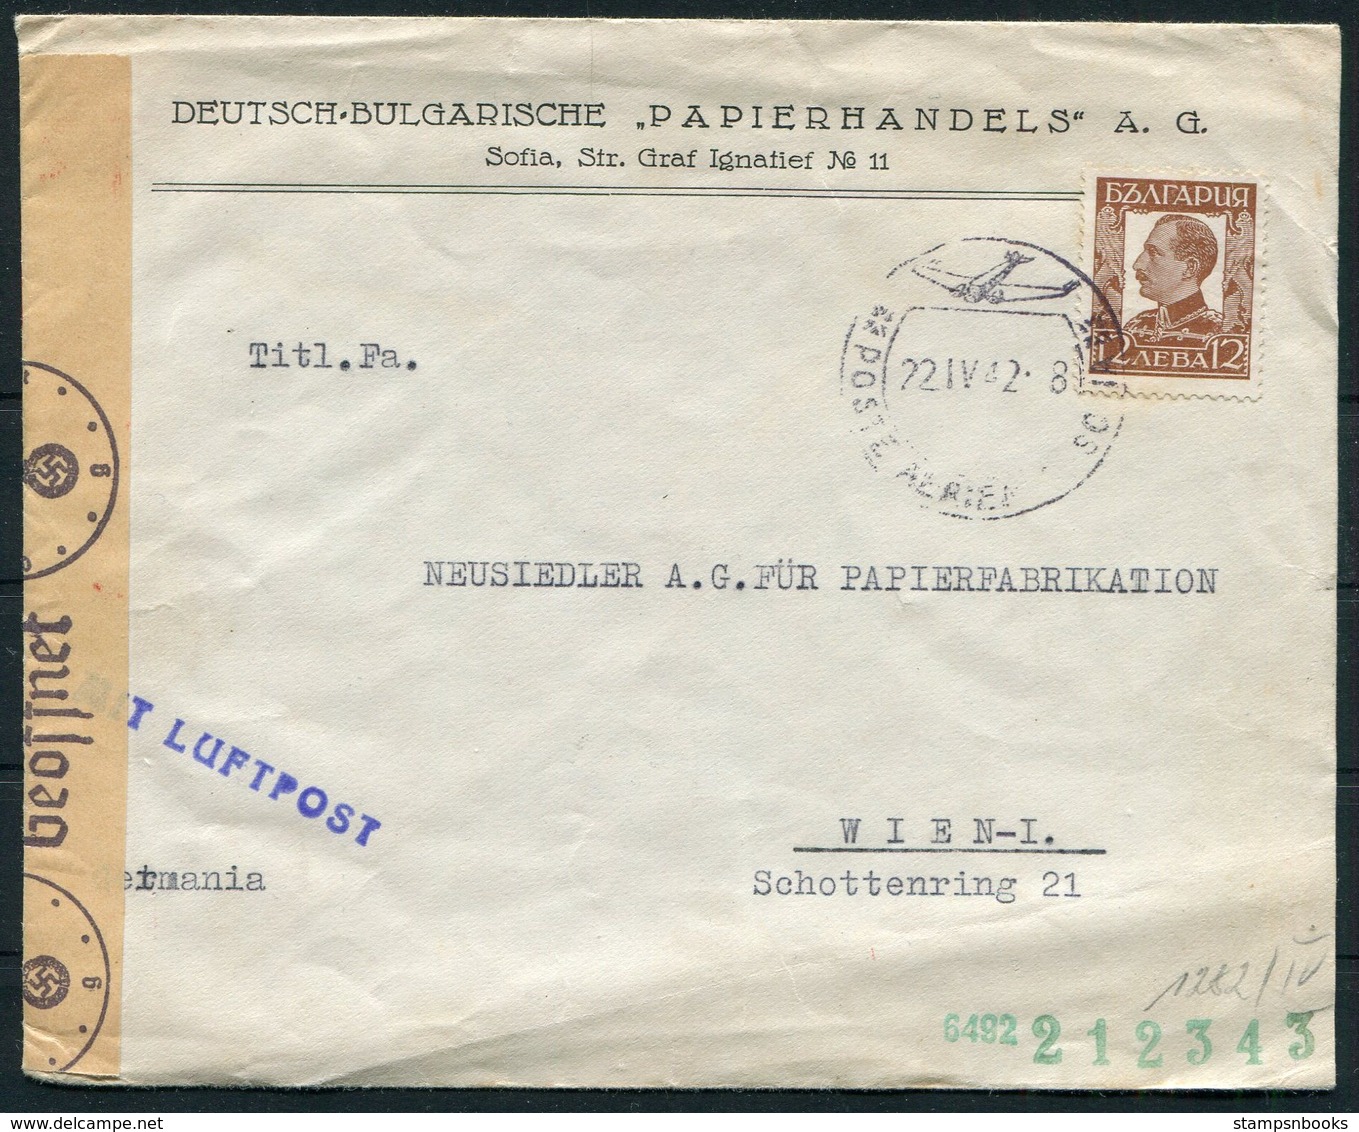 1942 Bulgaria Deutsche - Bulgarische Papierhandels A.G. Censor Cover, Sofia Airmail Luftpost - Wien Austria - Covers & Documents